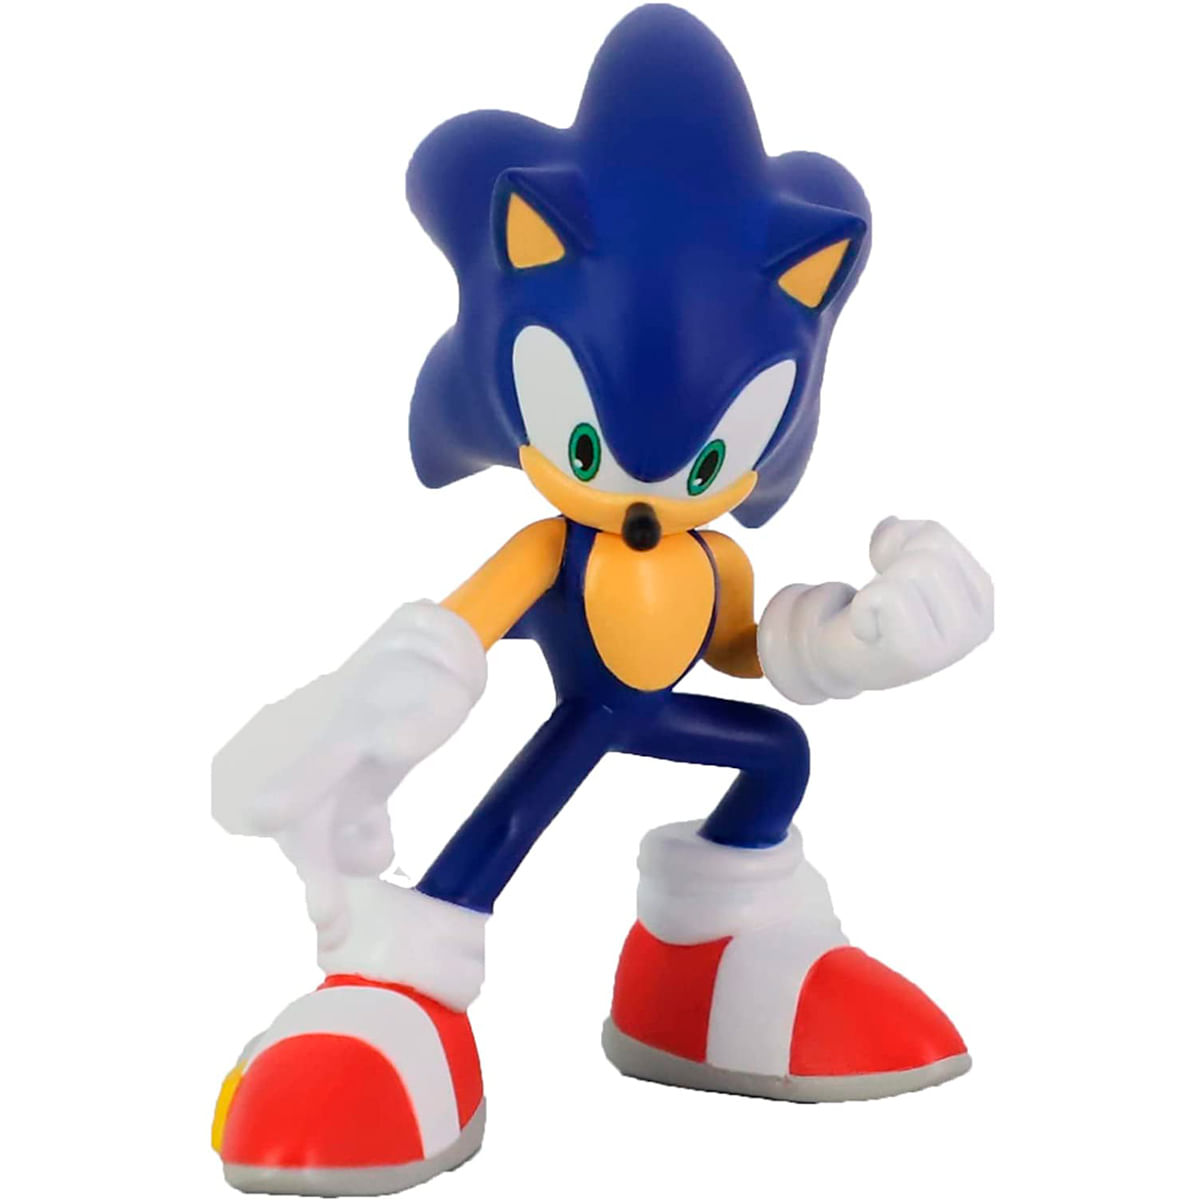 Comprar Figuras Sonic -1ud